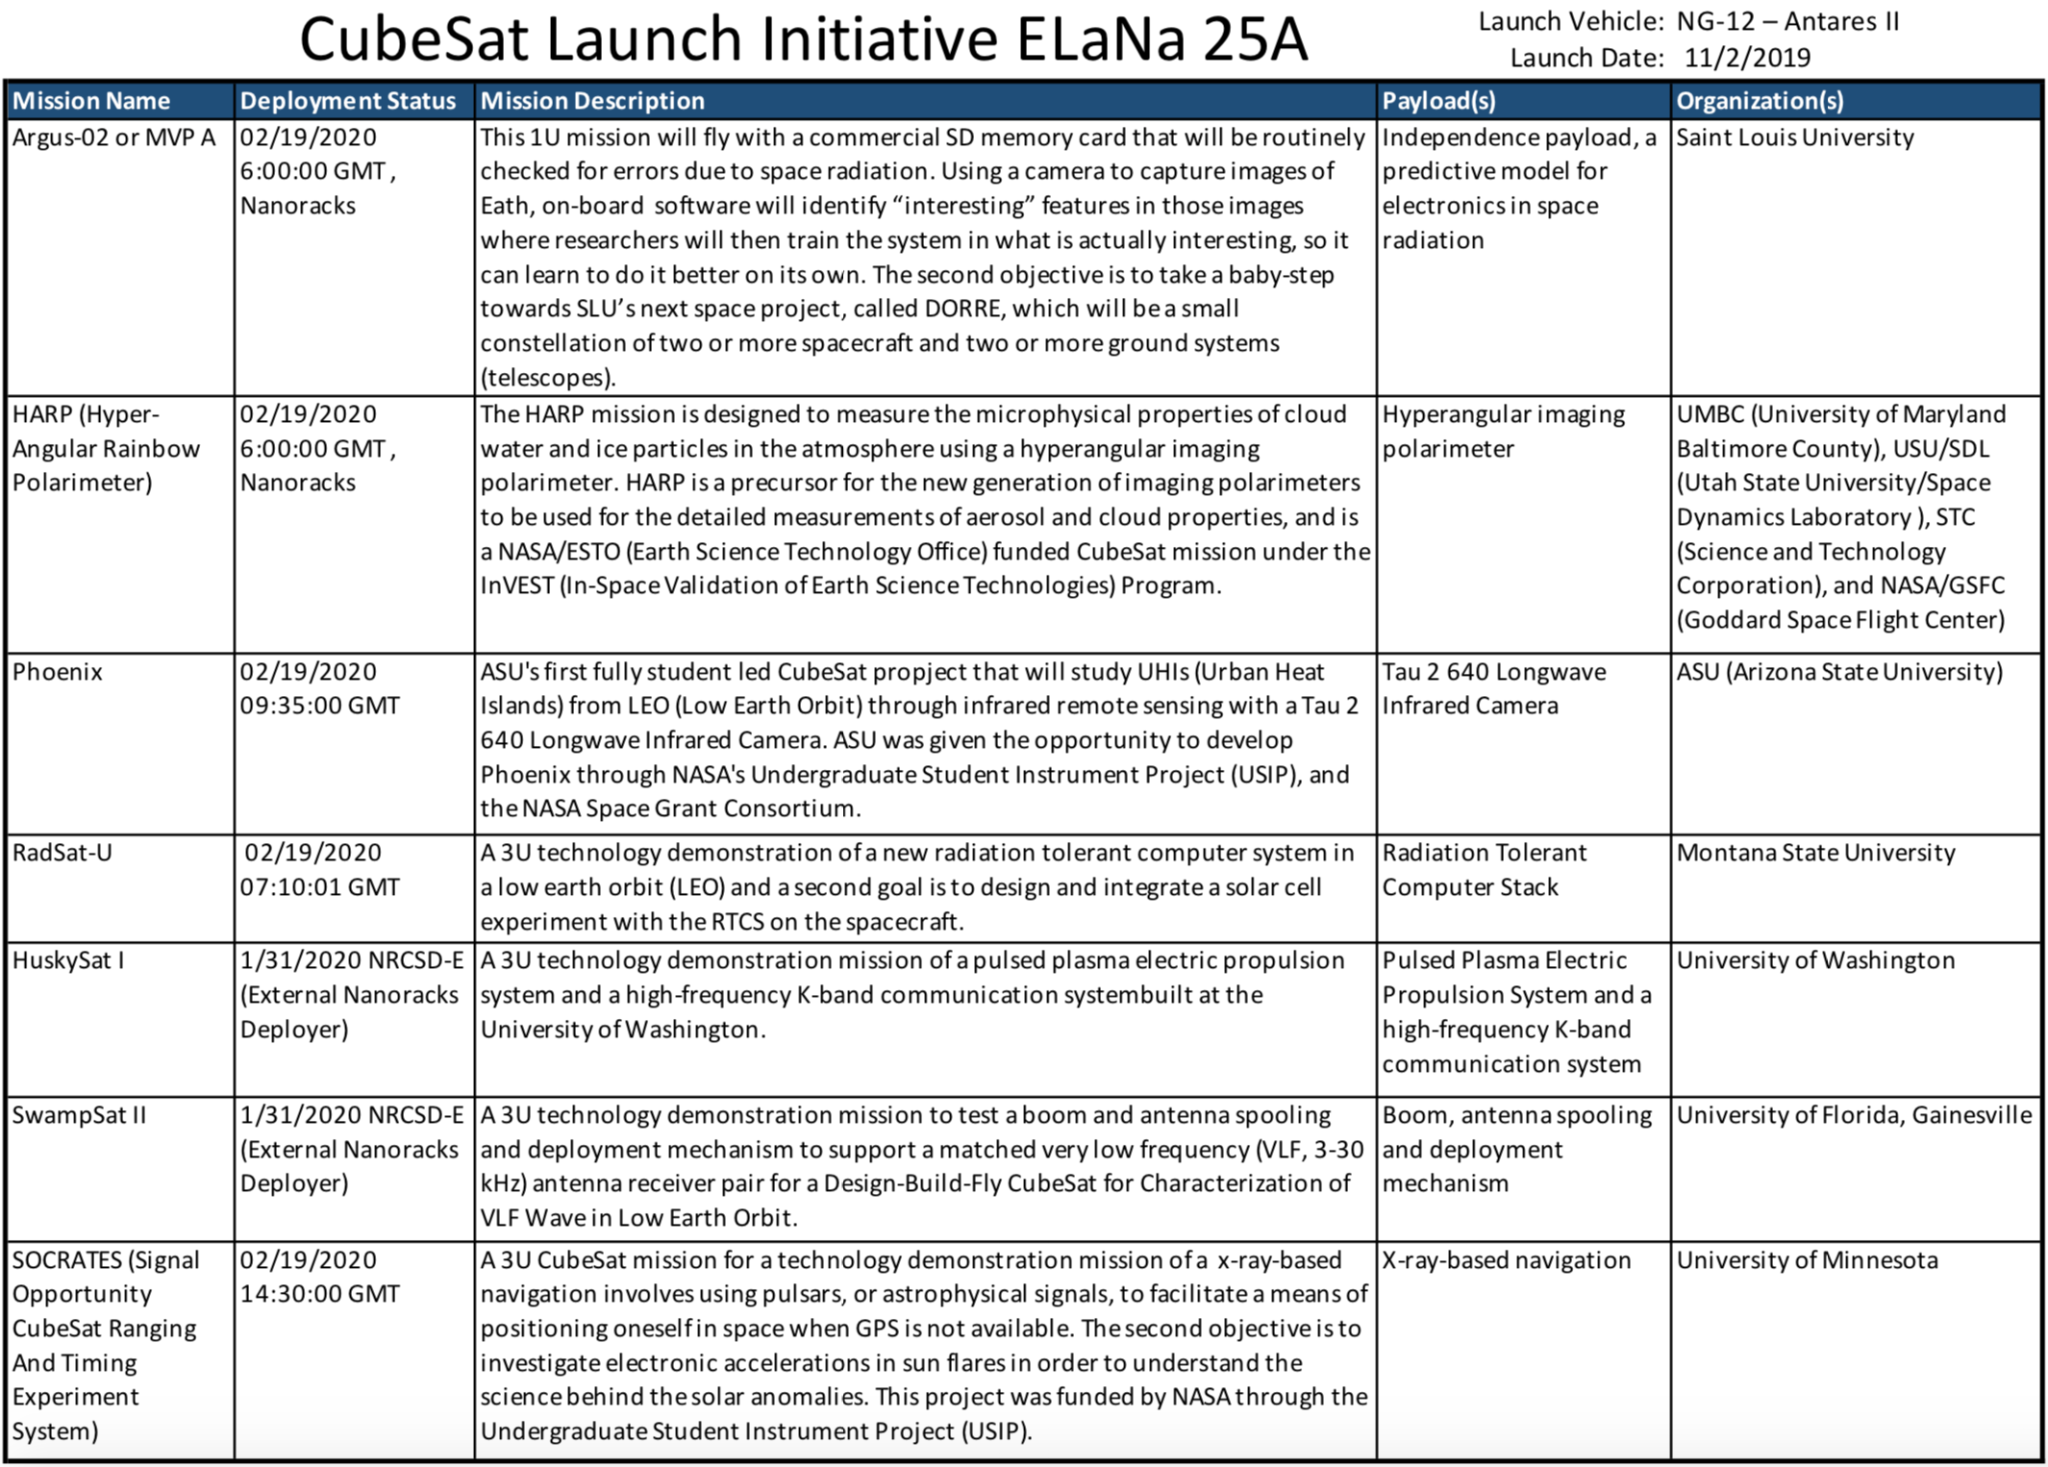 CubeSat Launch Initiative ELaNa 25A v5